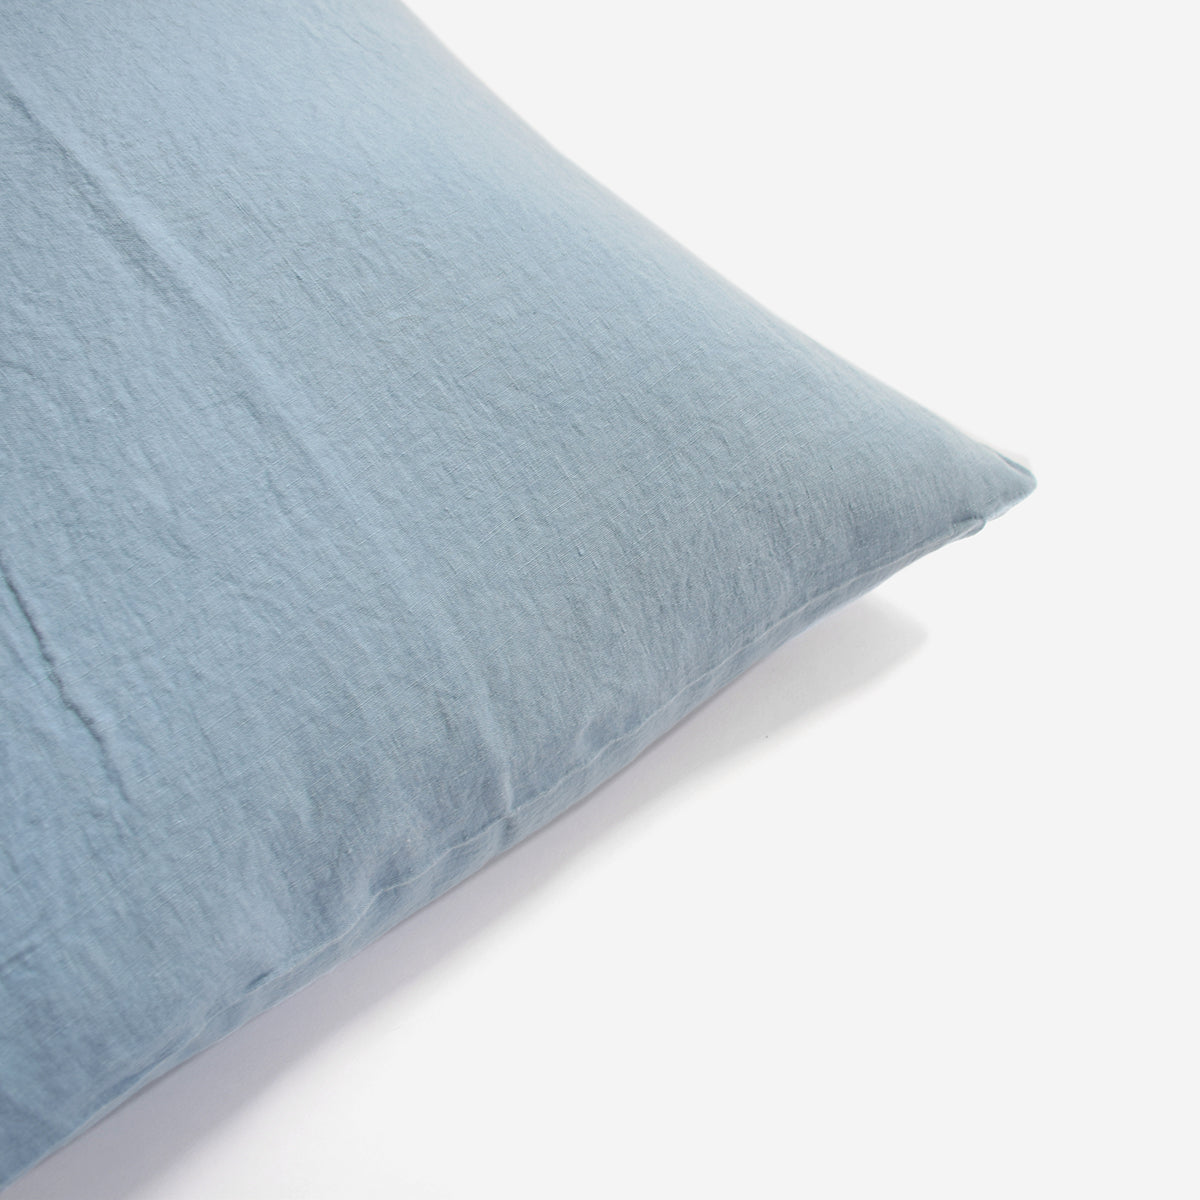 Linge Particulier Scandinavian Blue Standard Linen Pillowcase Sham for a colorful linen bedding look in grey blue - Collyer&#39;s Mansion